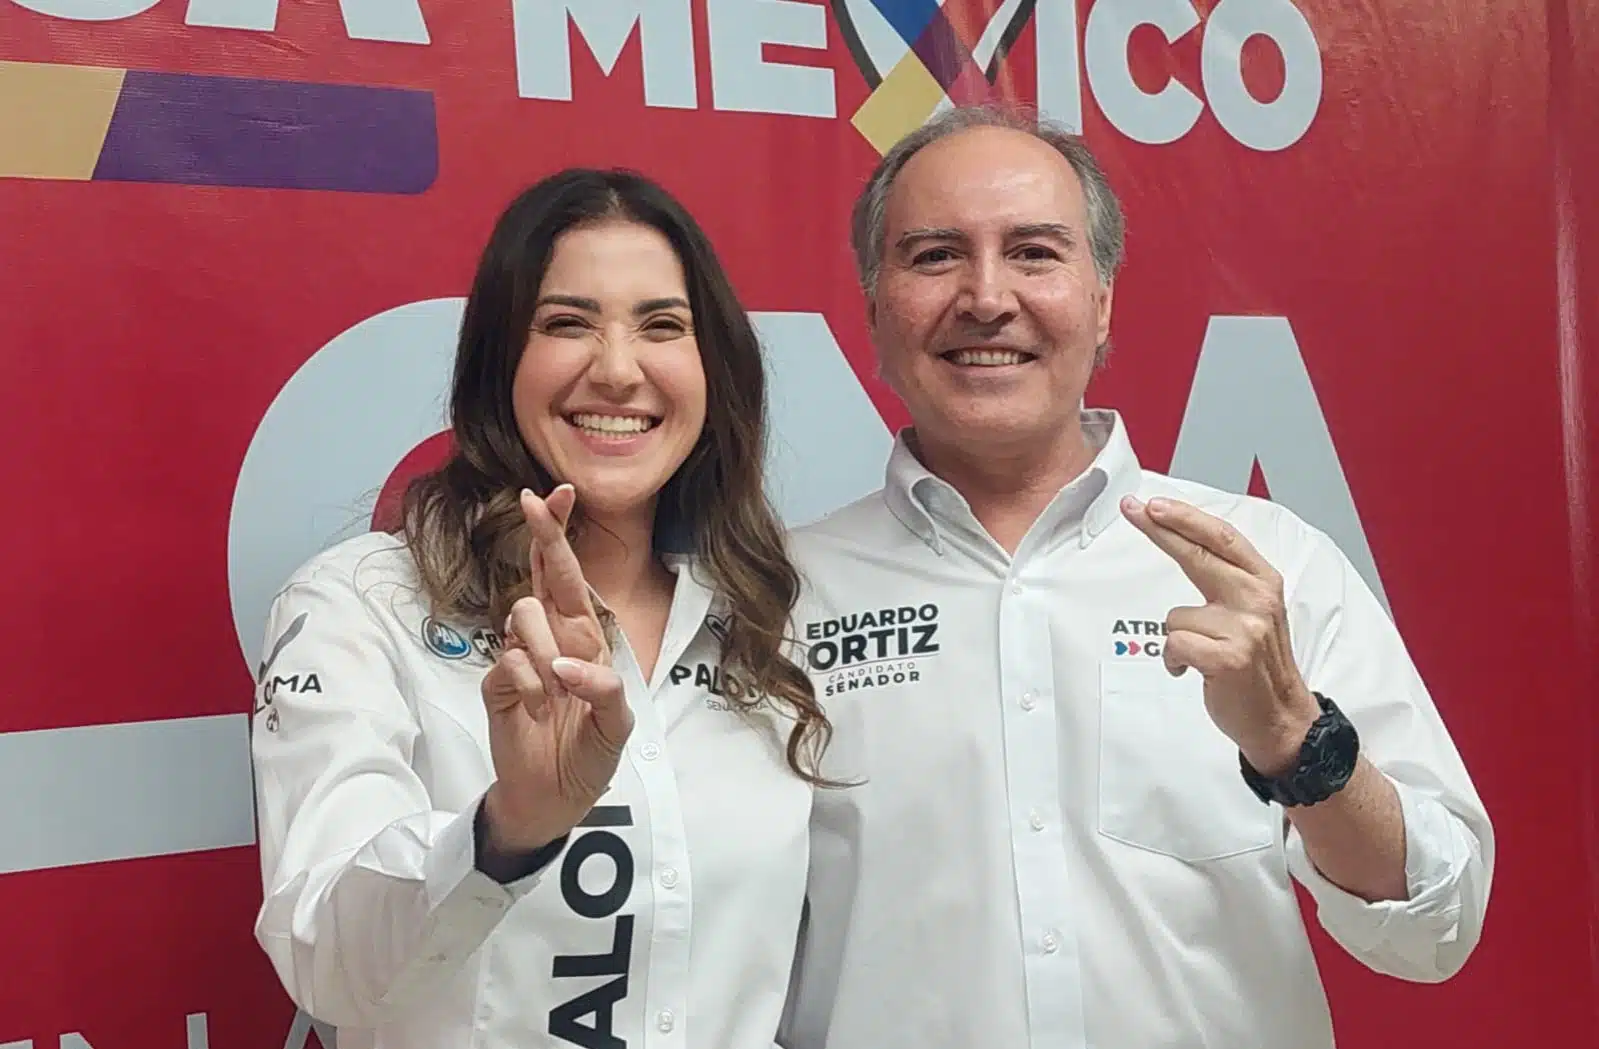 Eduardo Ortiz y Paloma Sánchez